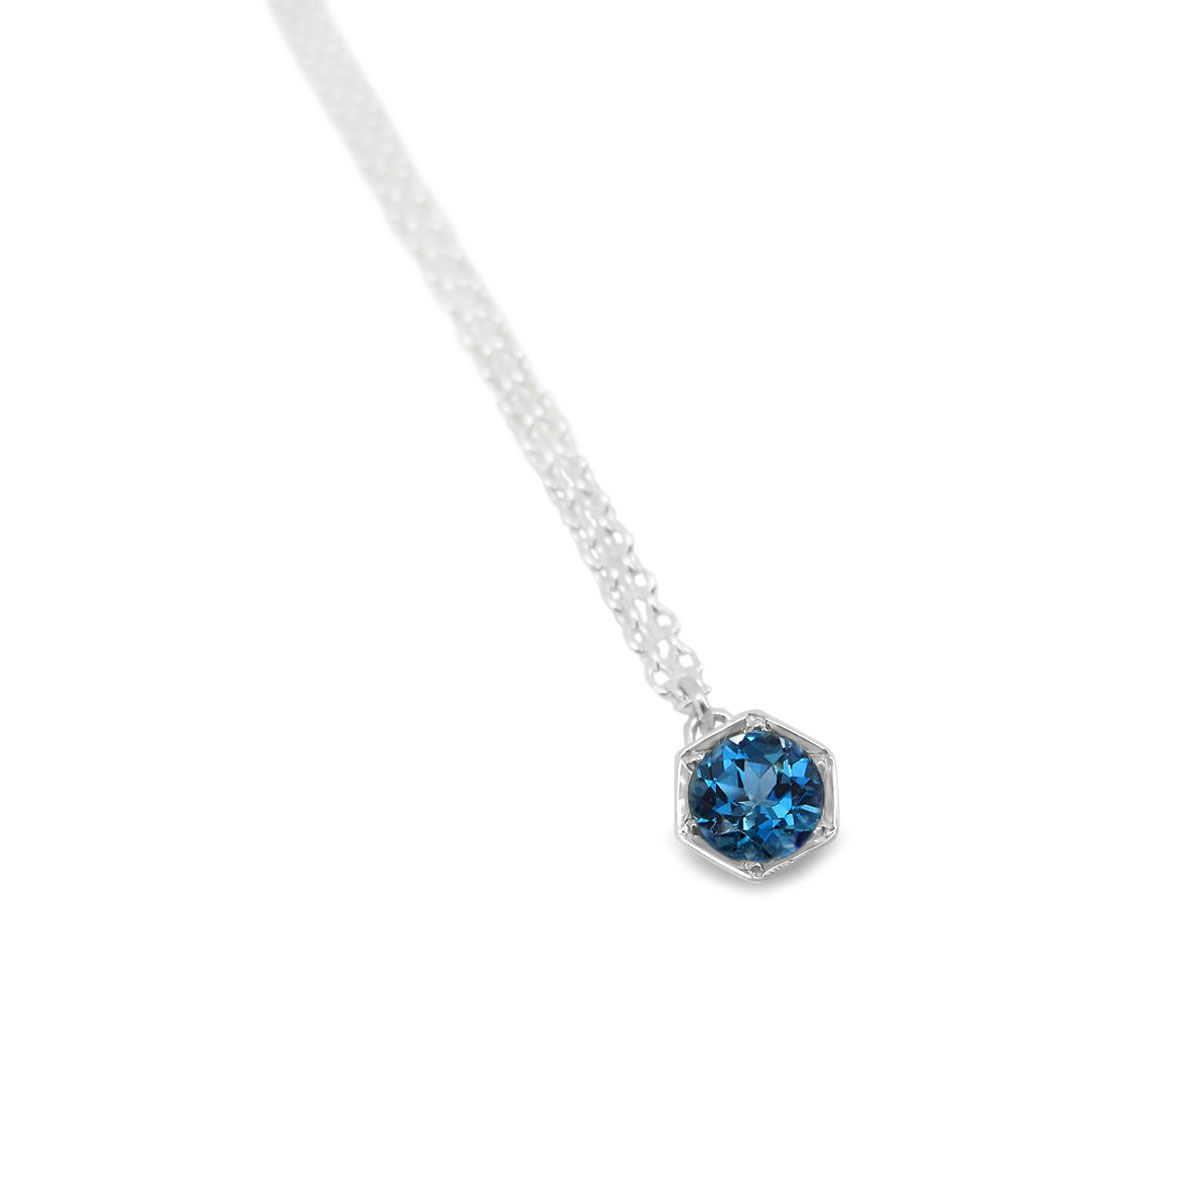 David Yurman Blue Topaz Cookie Necklace | Sandler's Diamonds & Time |  Columbia SC | Mt. Pleasant